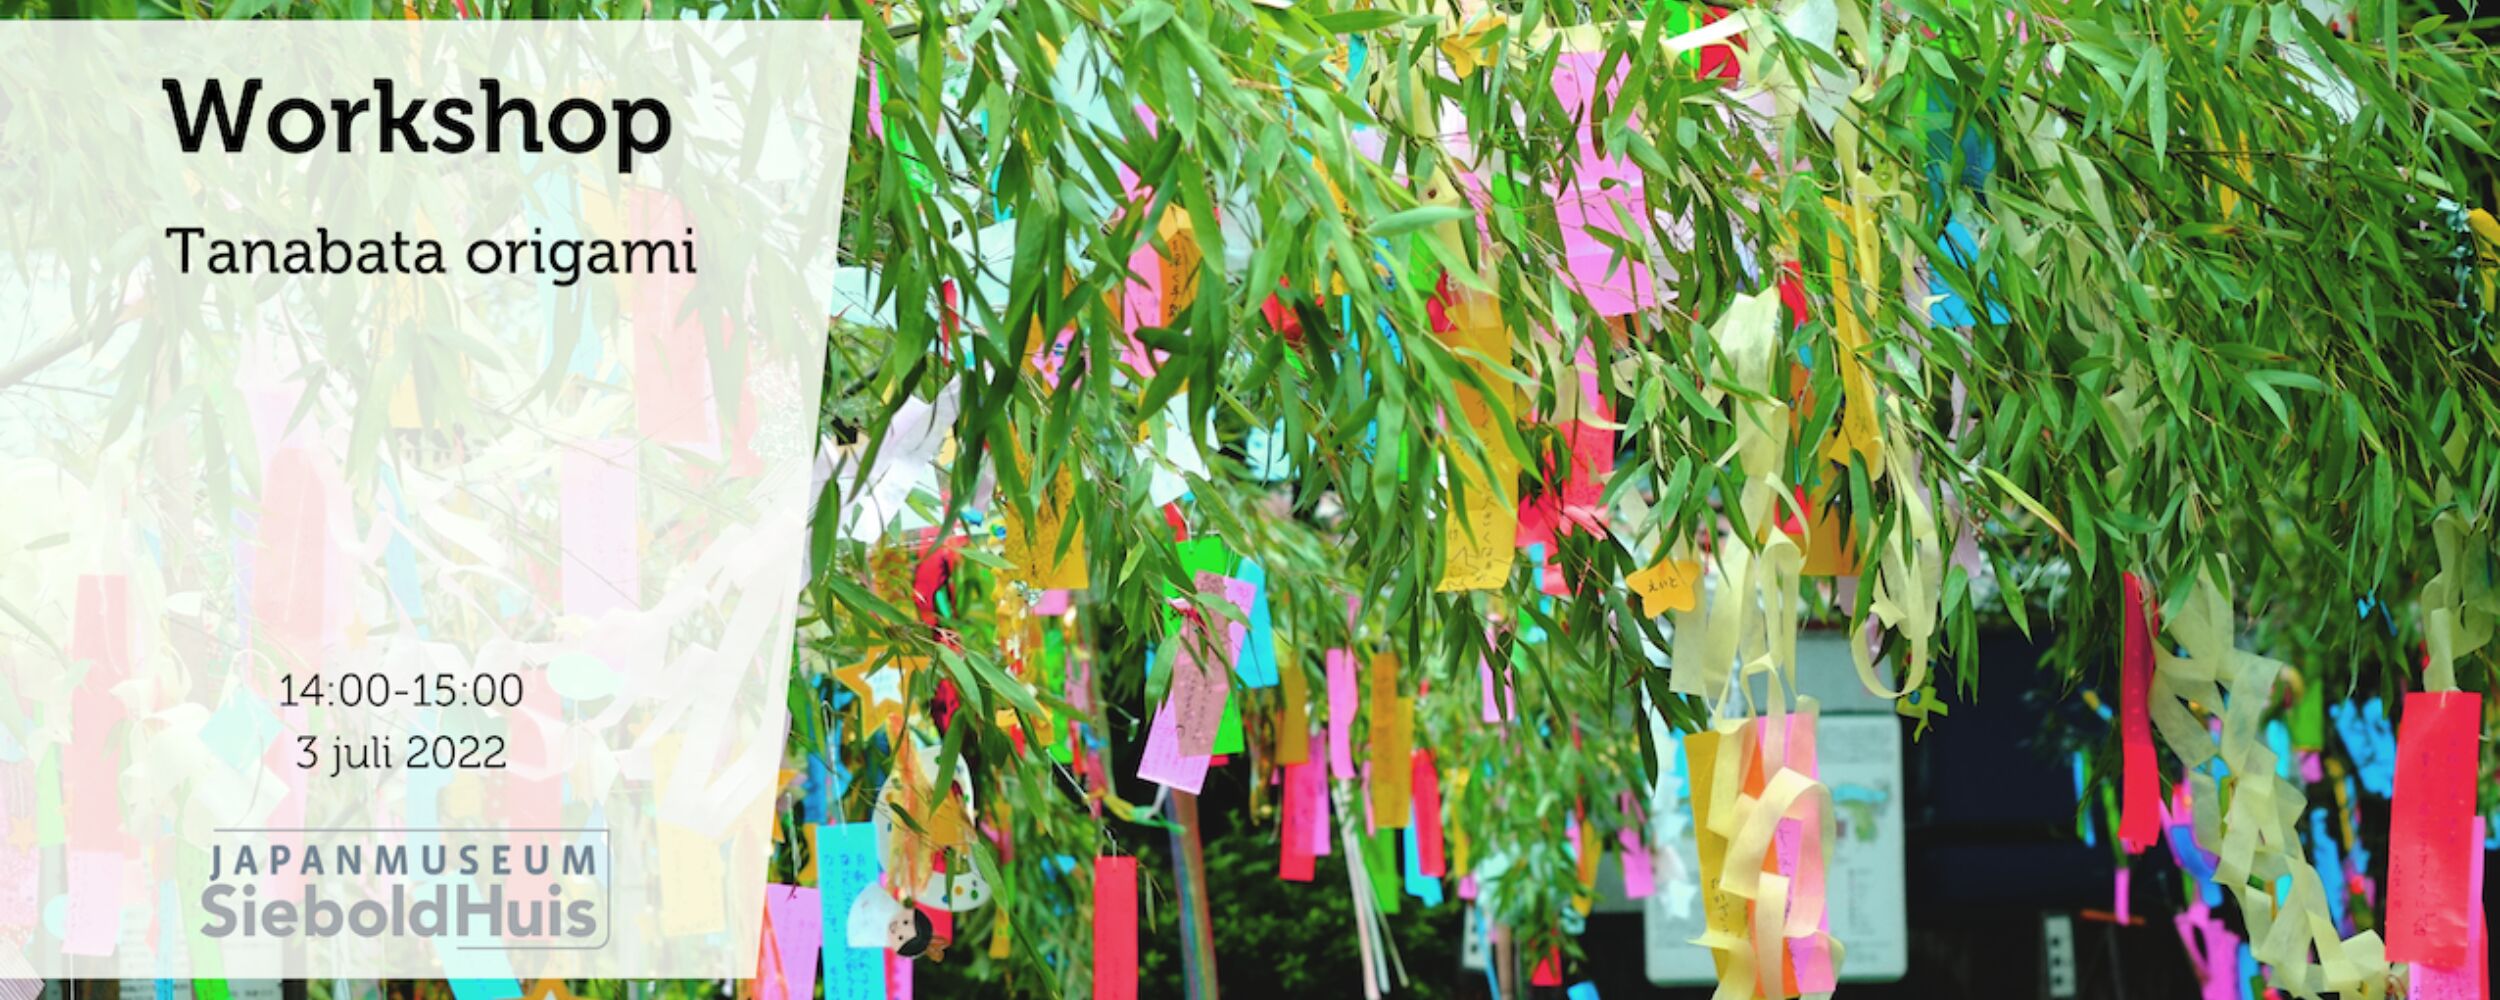 Workshop tanabata